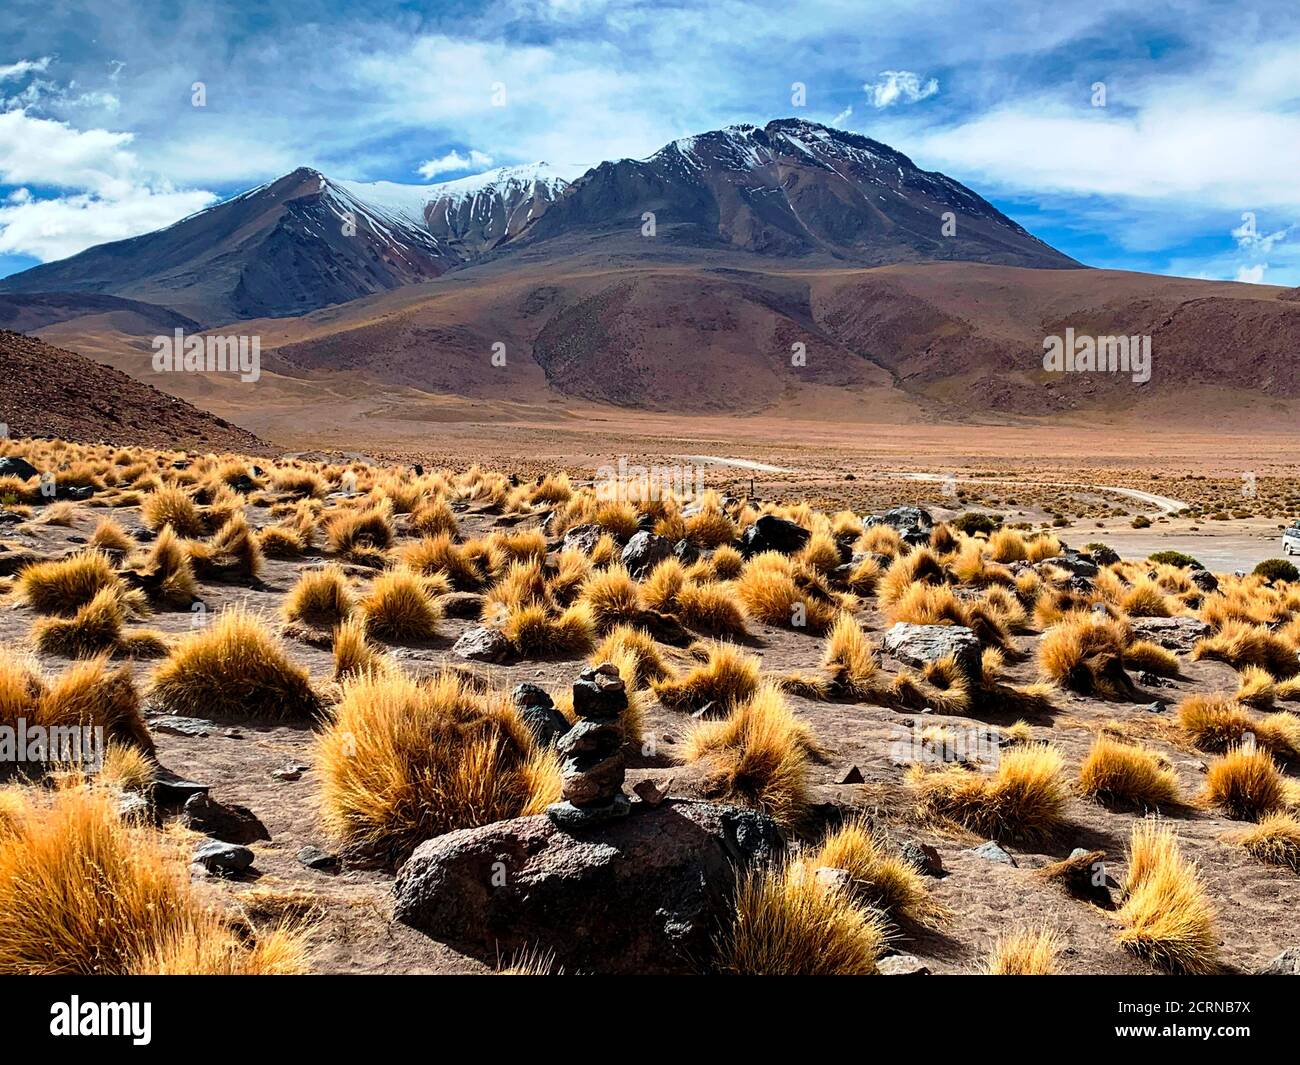 Vulkan Canapa in wilden puna Bolivien Hochland, Altiplano Plateau. Atemberaubende Atacama Wüstenlandschaft. Orangefarbenes paja brava Gras. Festuca orthophylla. Stockfoto